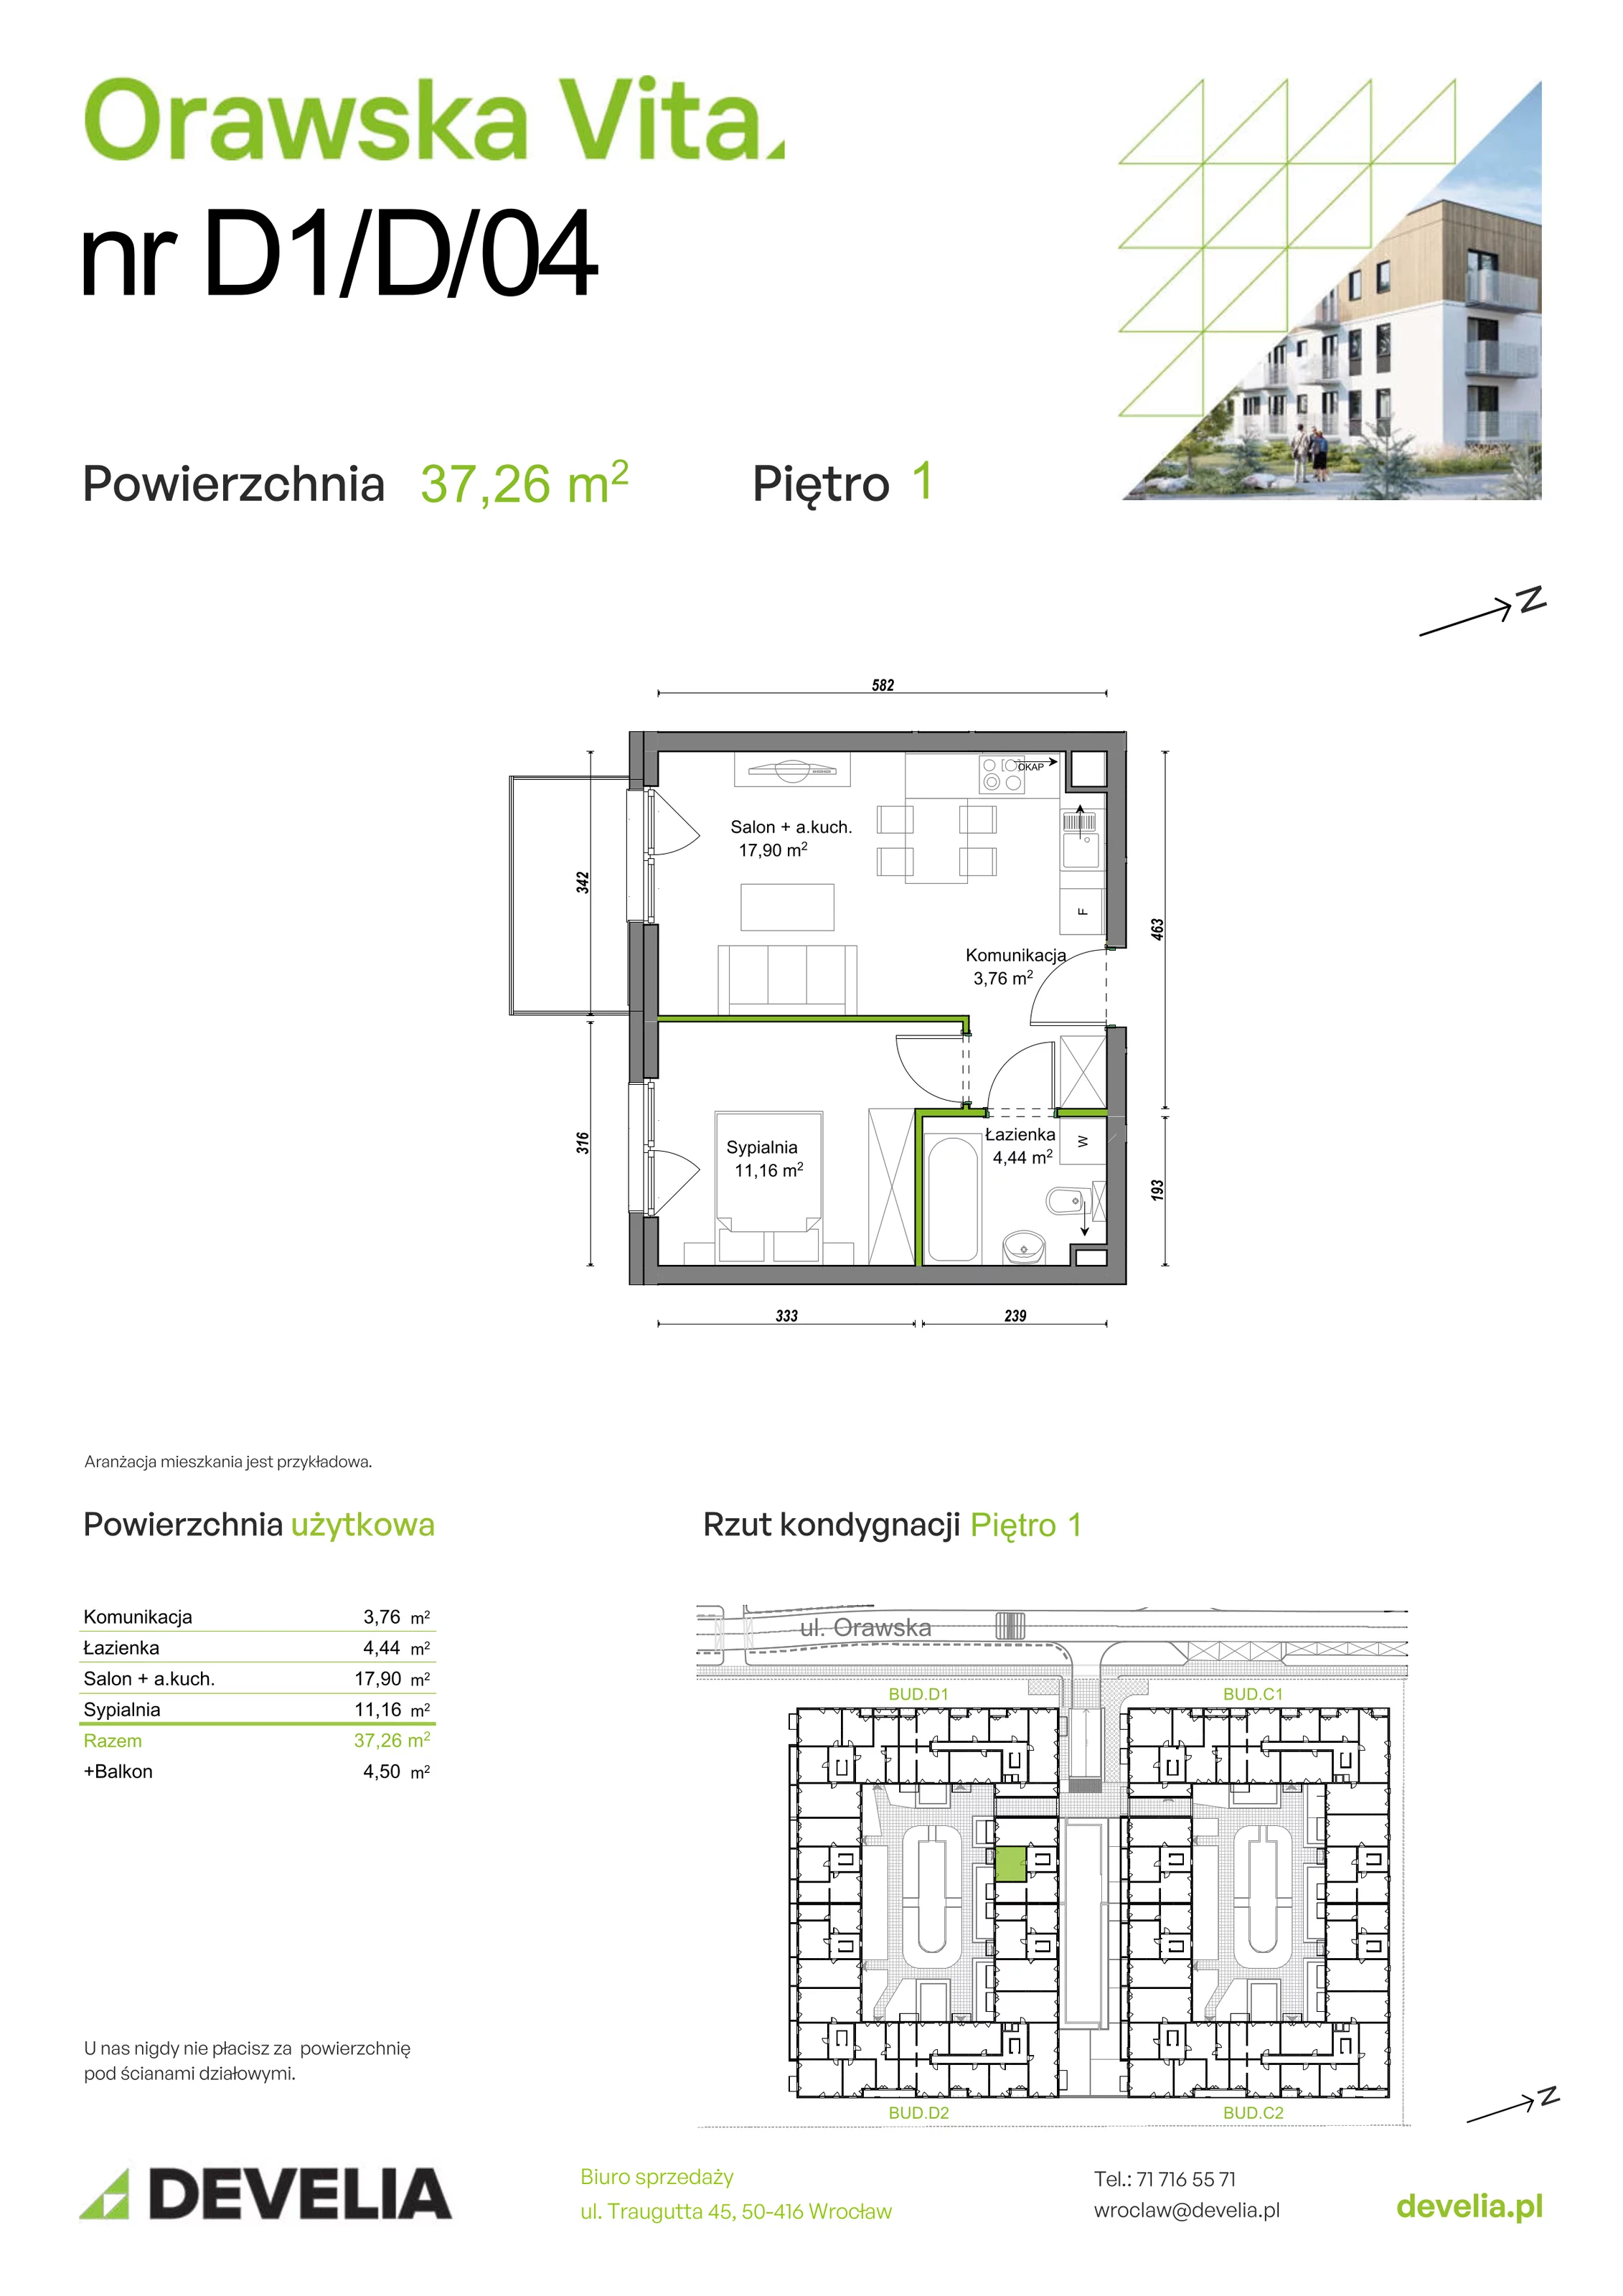 Mieszkanie 37,26 m², piętro 1, oferta nr D1/D/04, Orawska Vita, Wrocław, Ołtaszyn, Krzyki, ul. Orawska 73